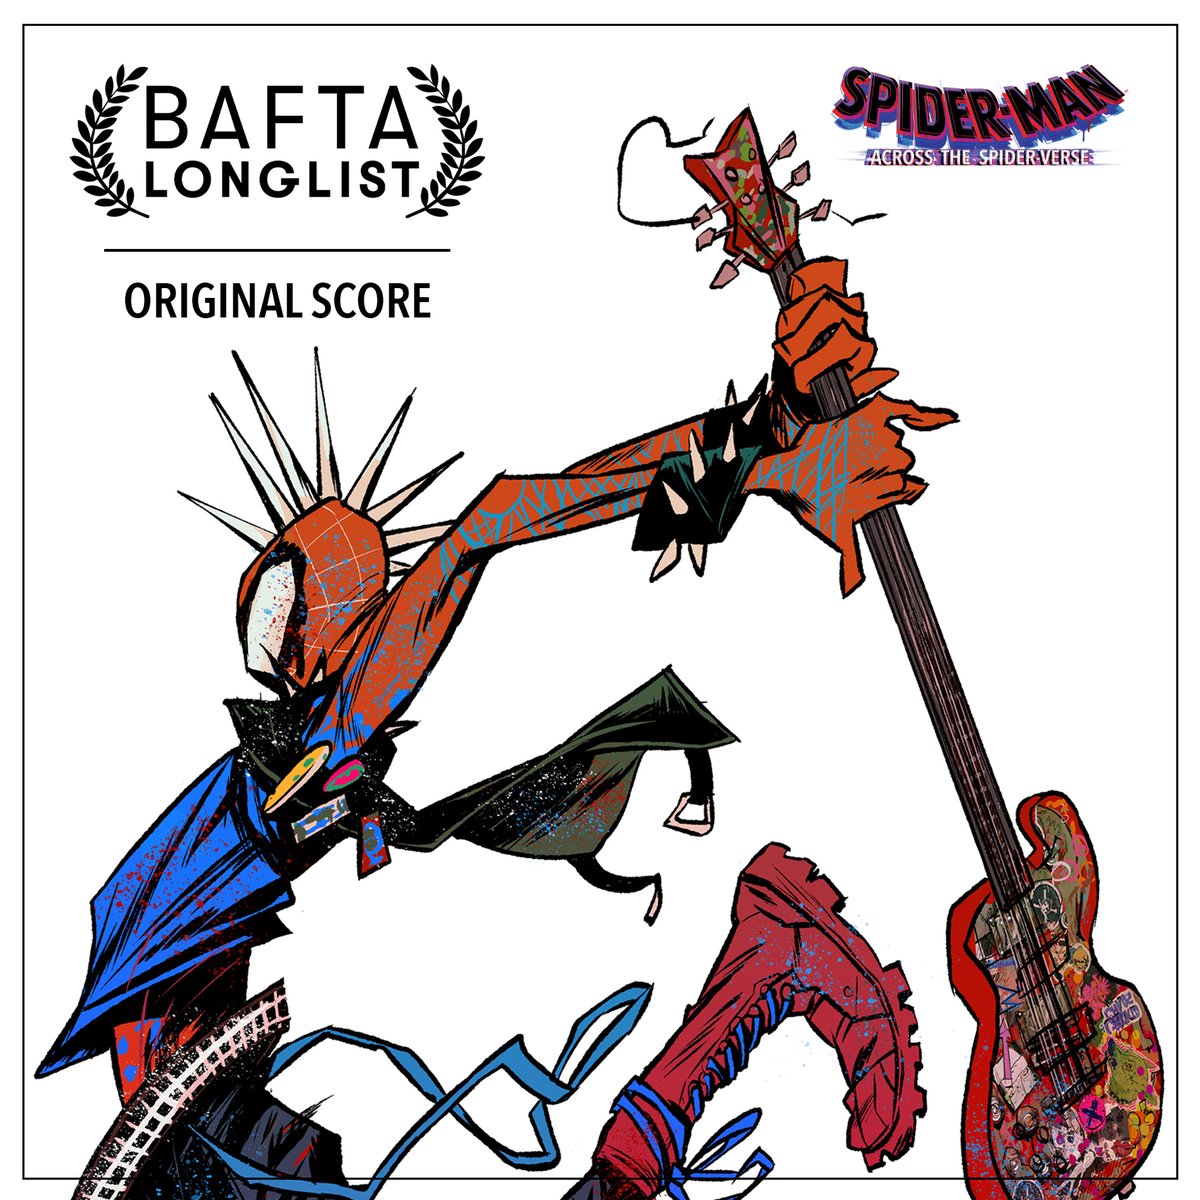 Spider-Man: Across the #SpiderVerse is on the @BAFTA longlist for Original Score. #EEBAFTAS